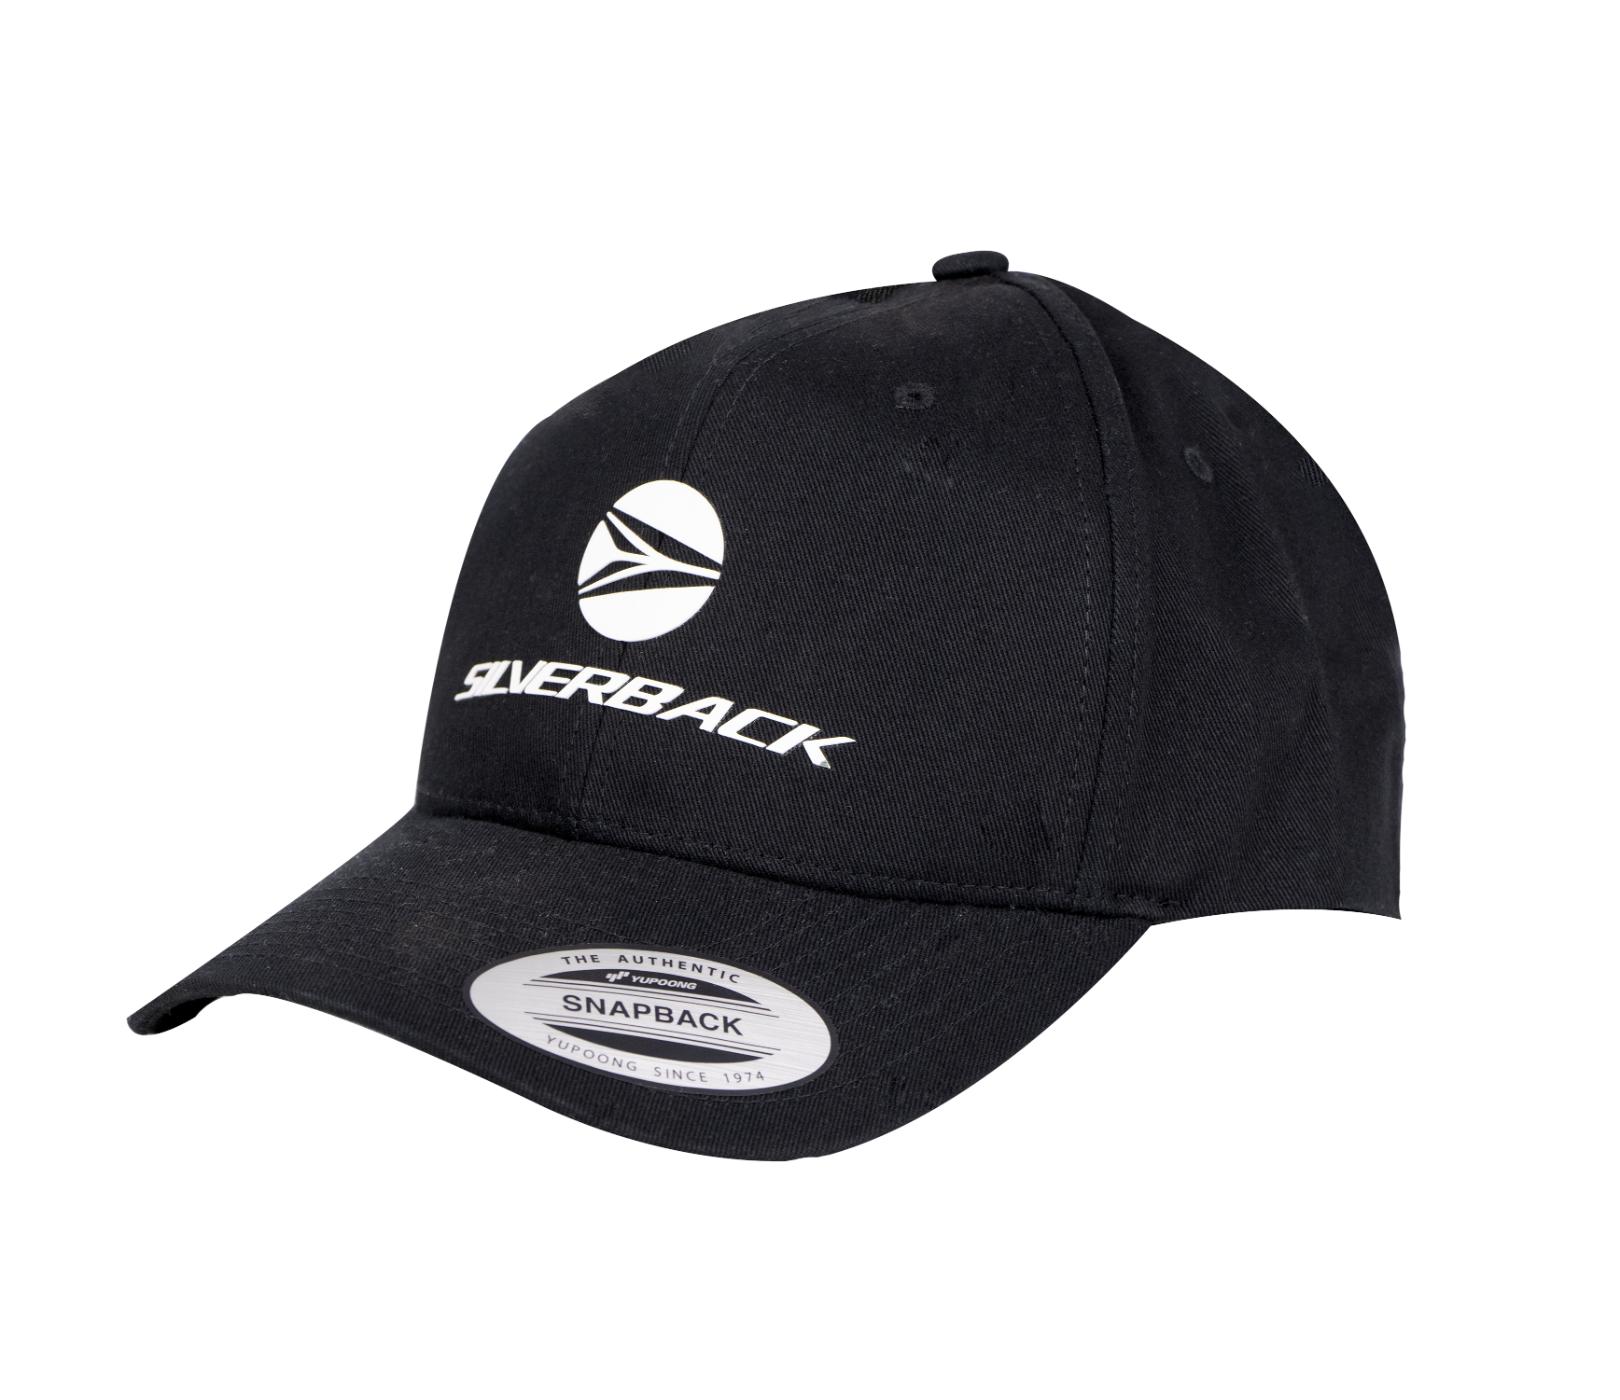 Silverback Unisex Black Cap 